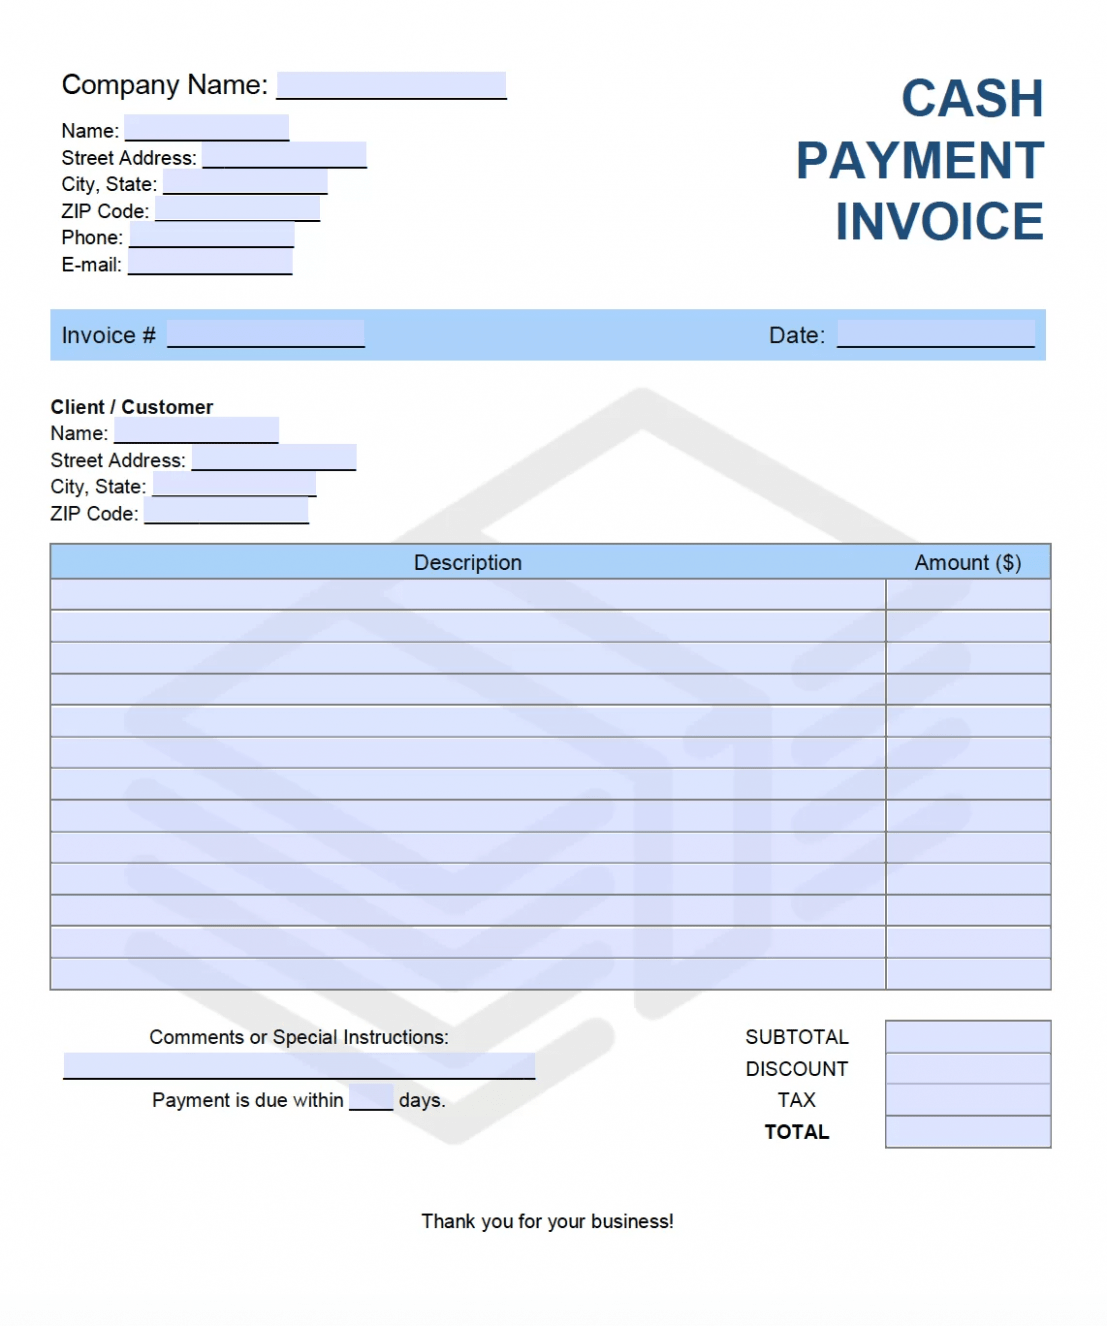 Sample Cash Receipt Invoice Template Word